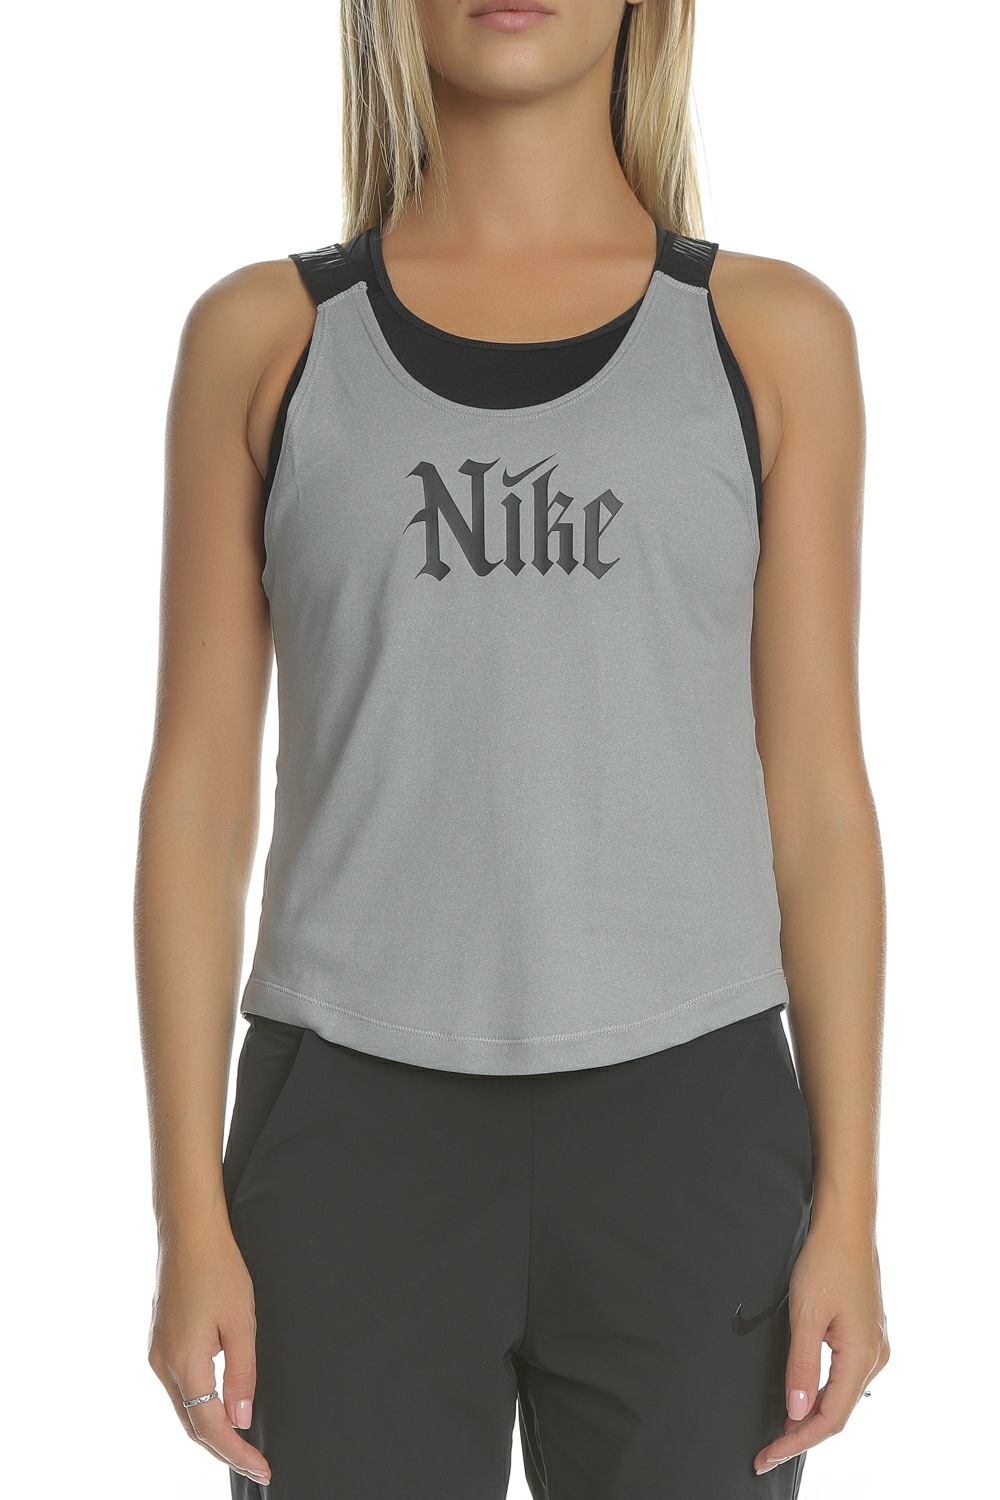 NIKE - Γυναικεία αμάνικη μπλούζα NIKE DRY TANK ELSTKA CROP GRX γκρι Γυναικεία/Ρούχα/Αθλητικά/T-shirt-Τοπ